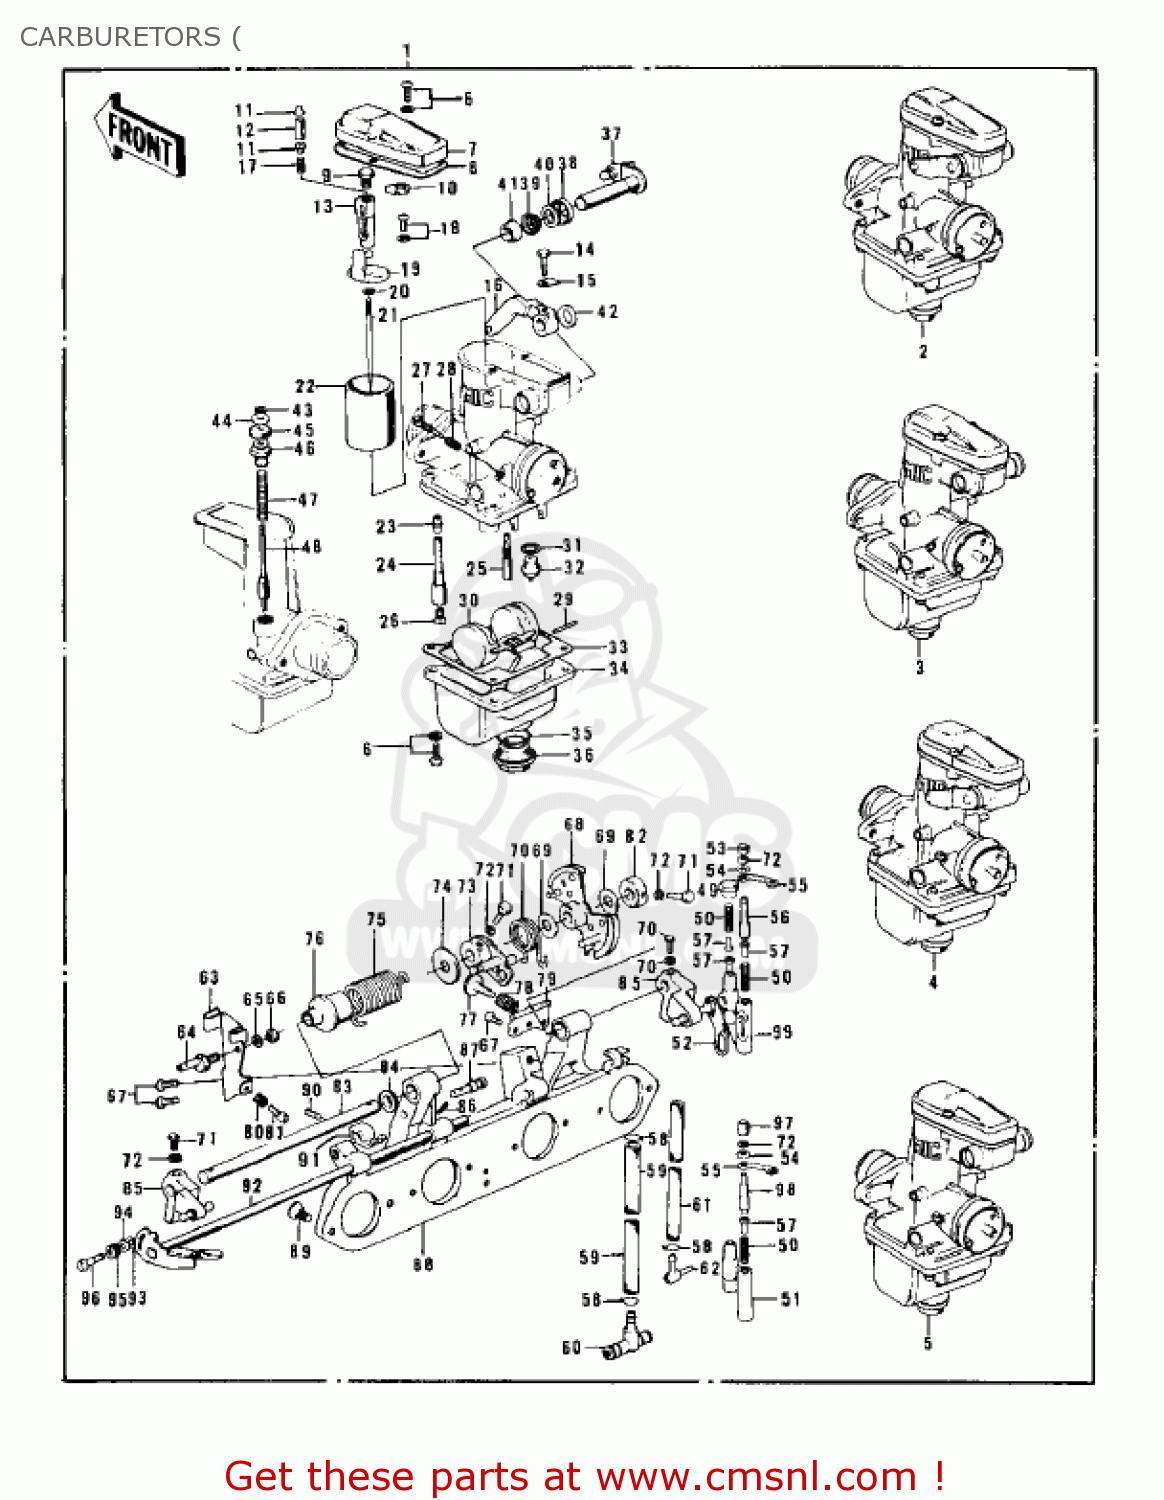 kawasaki-z1-a-1974-usa-carburetors_bigkar119561215_b9ca.gif